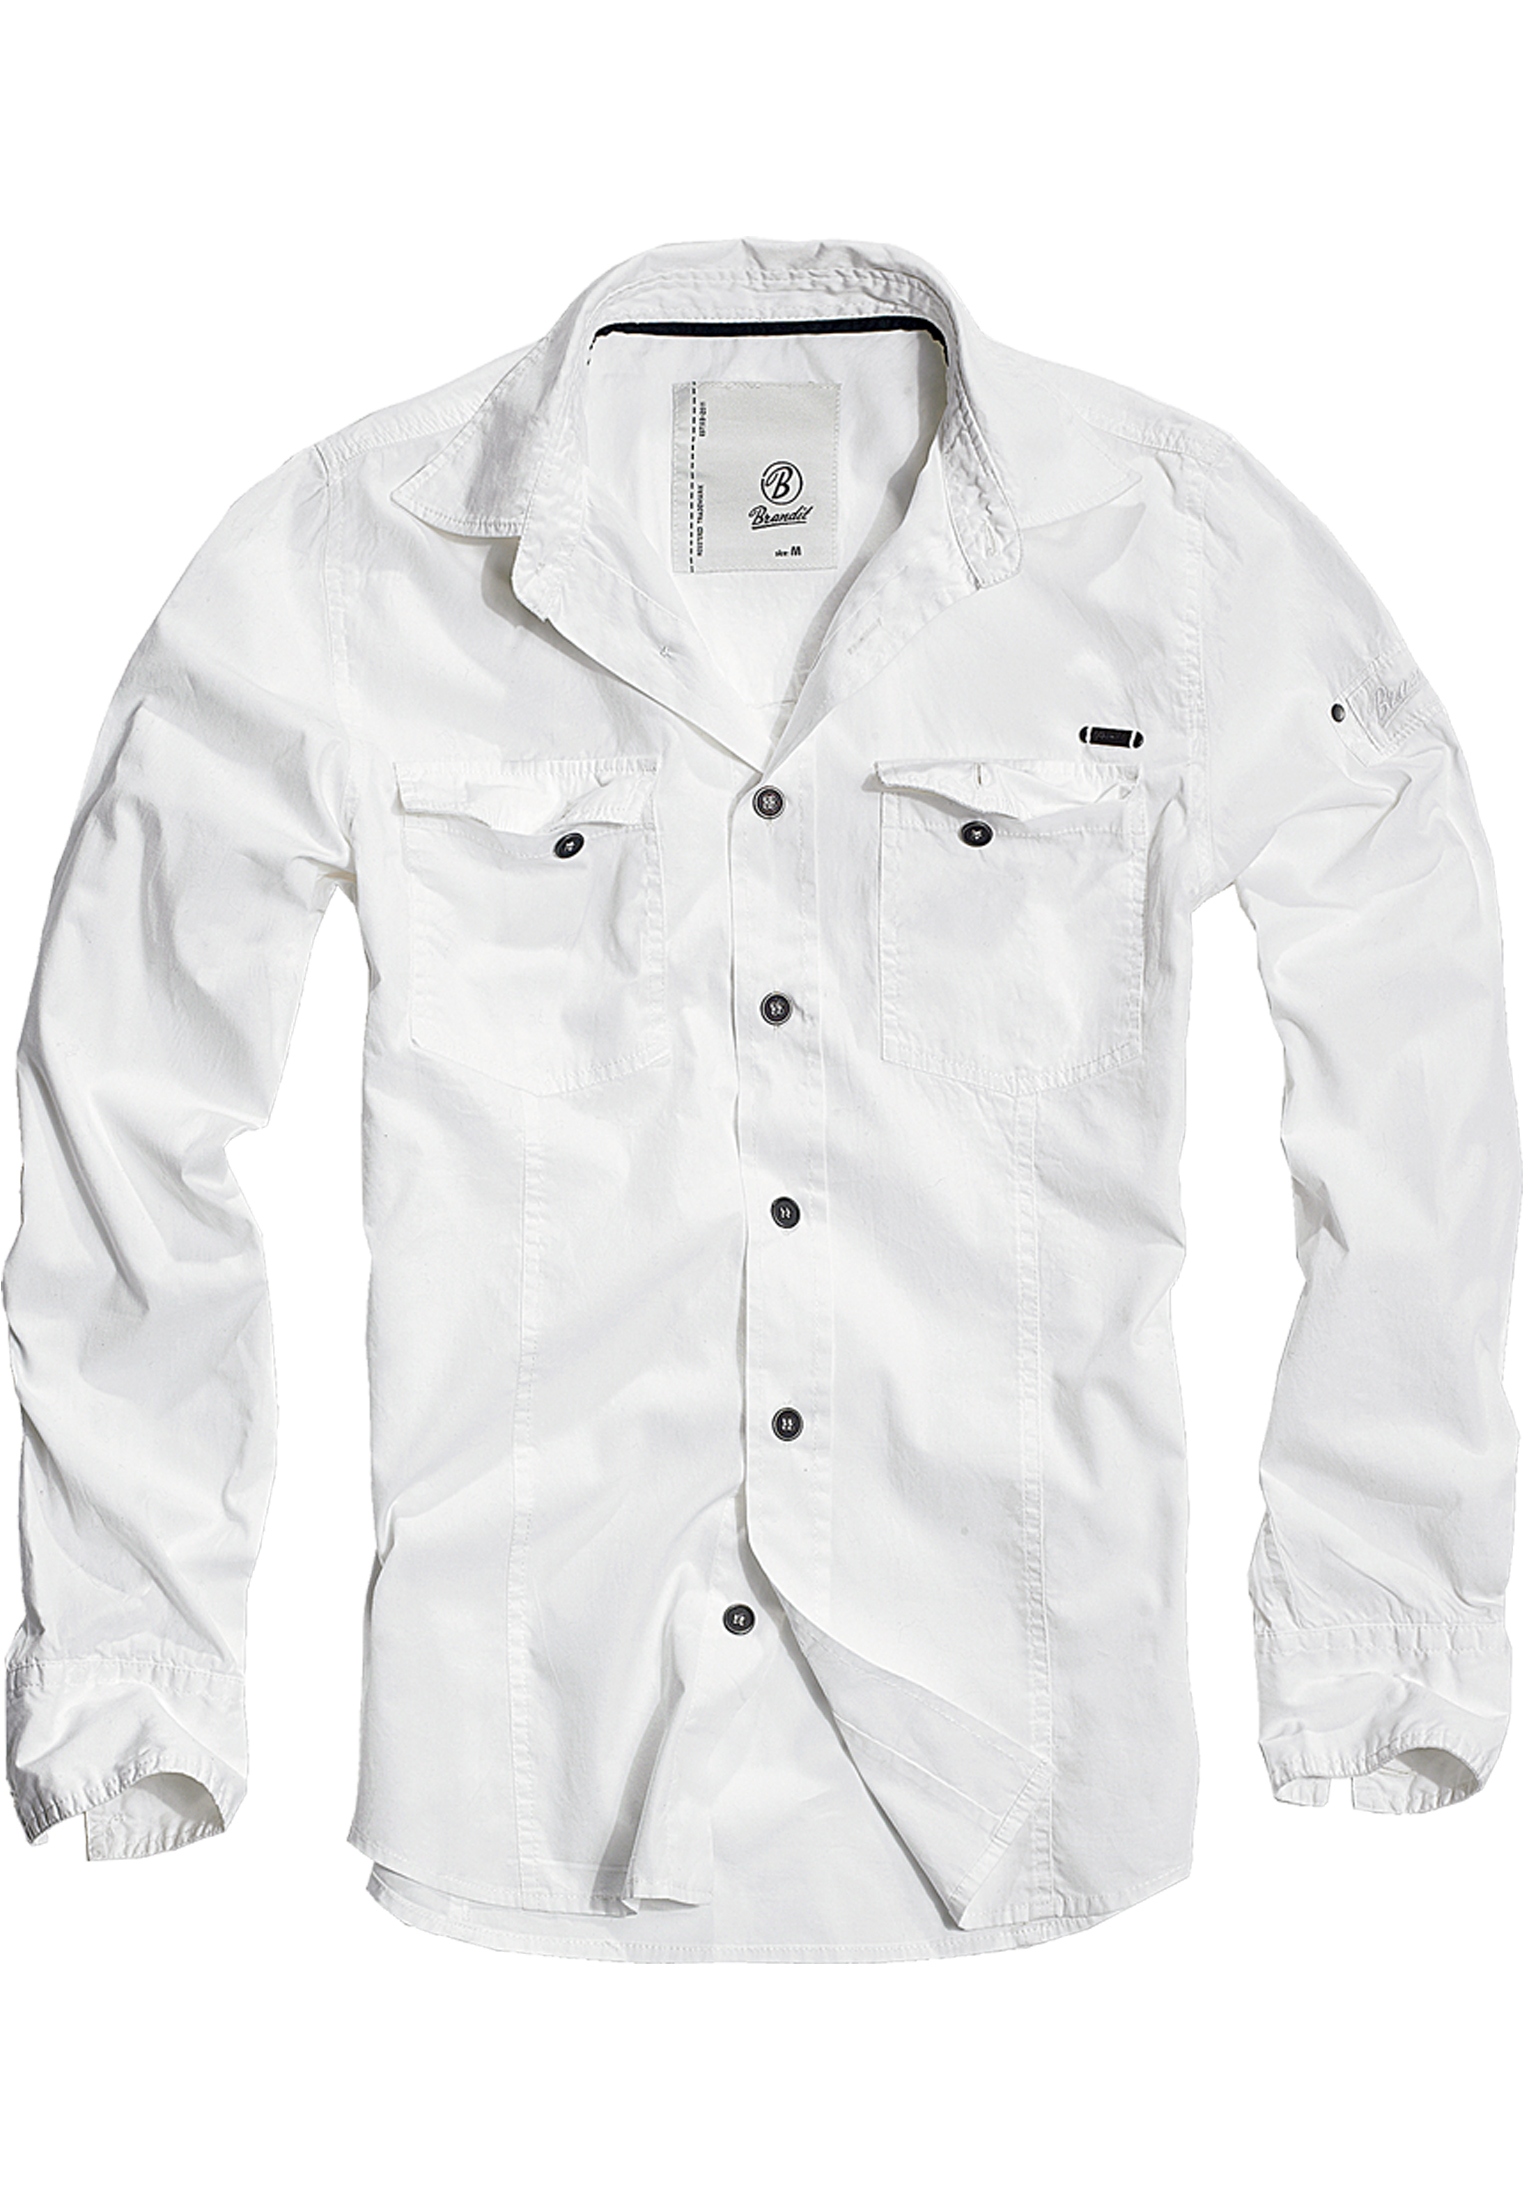 Hemden Slim Worker Shirt in Farbe white